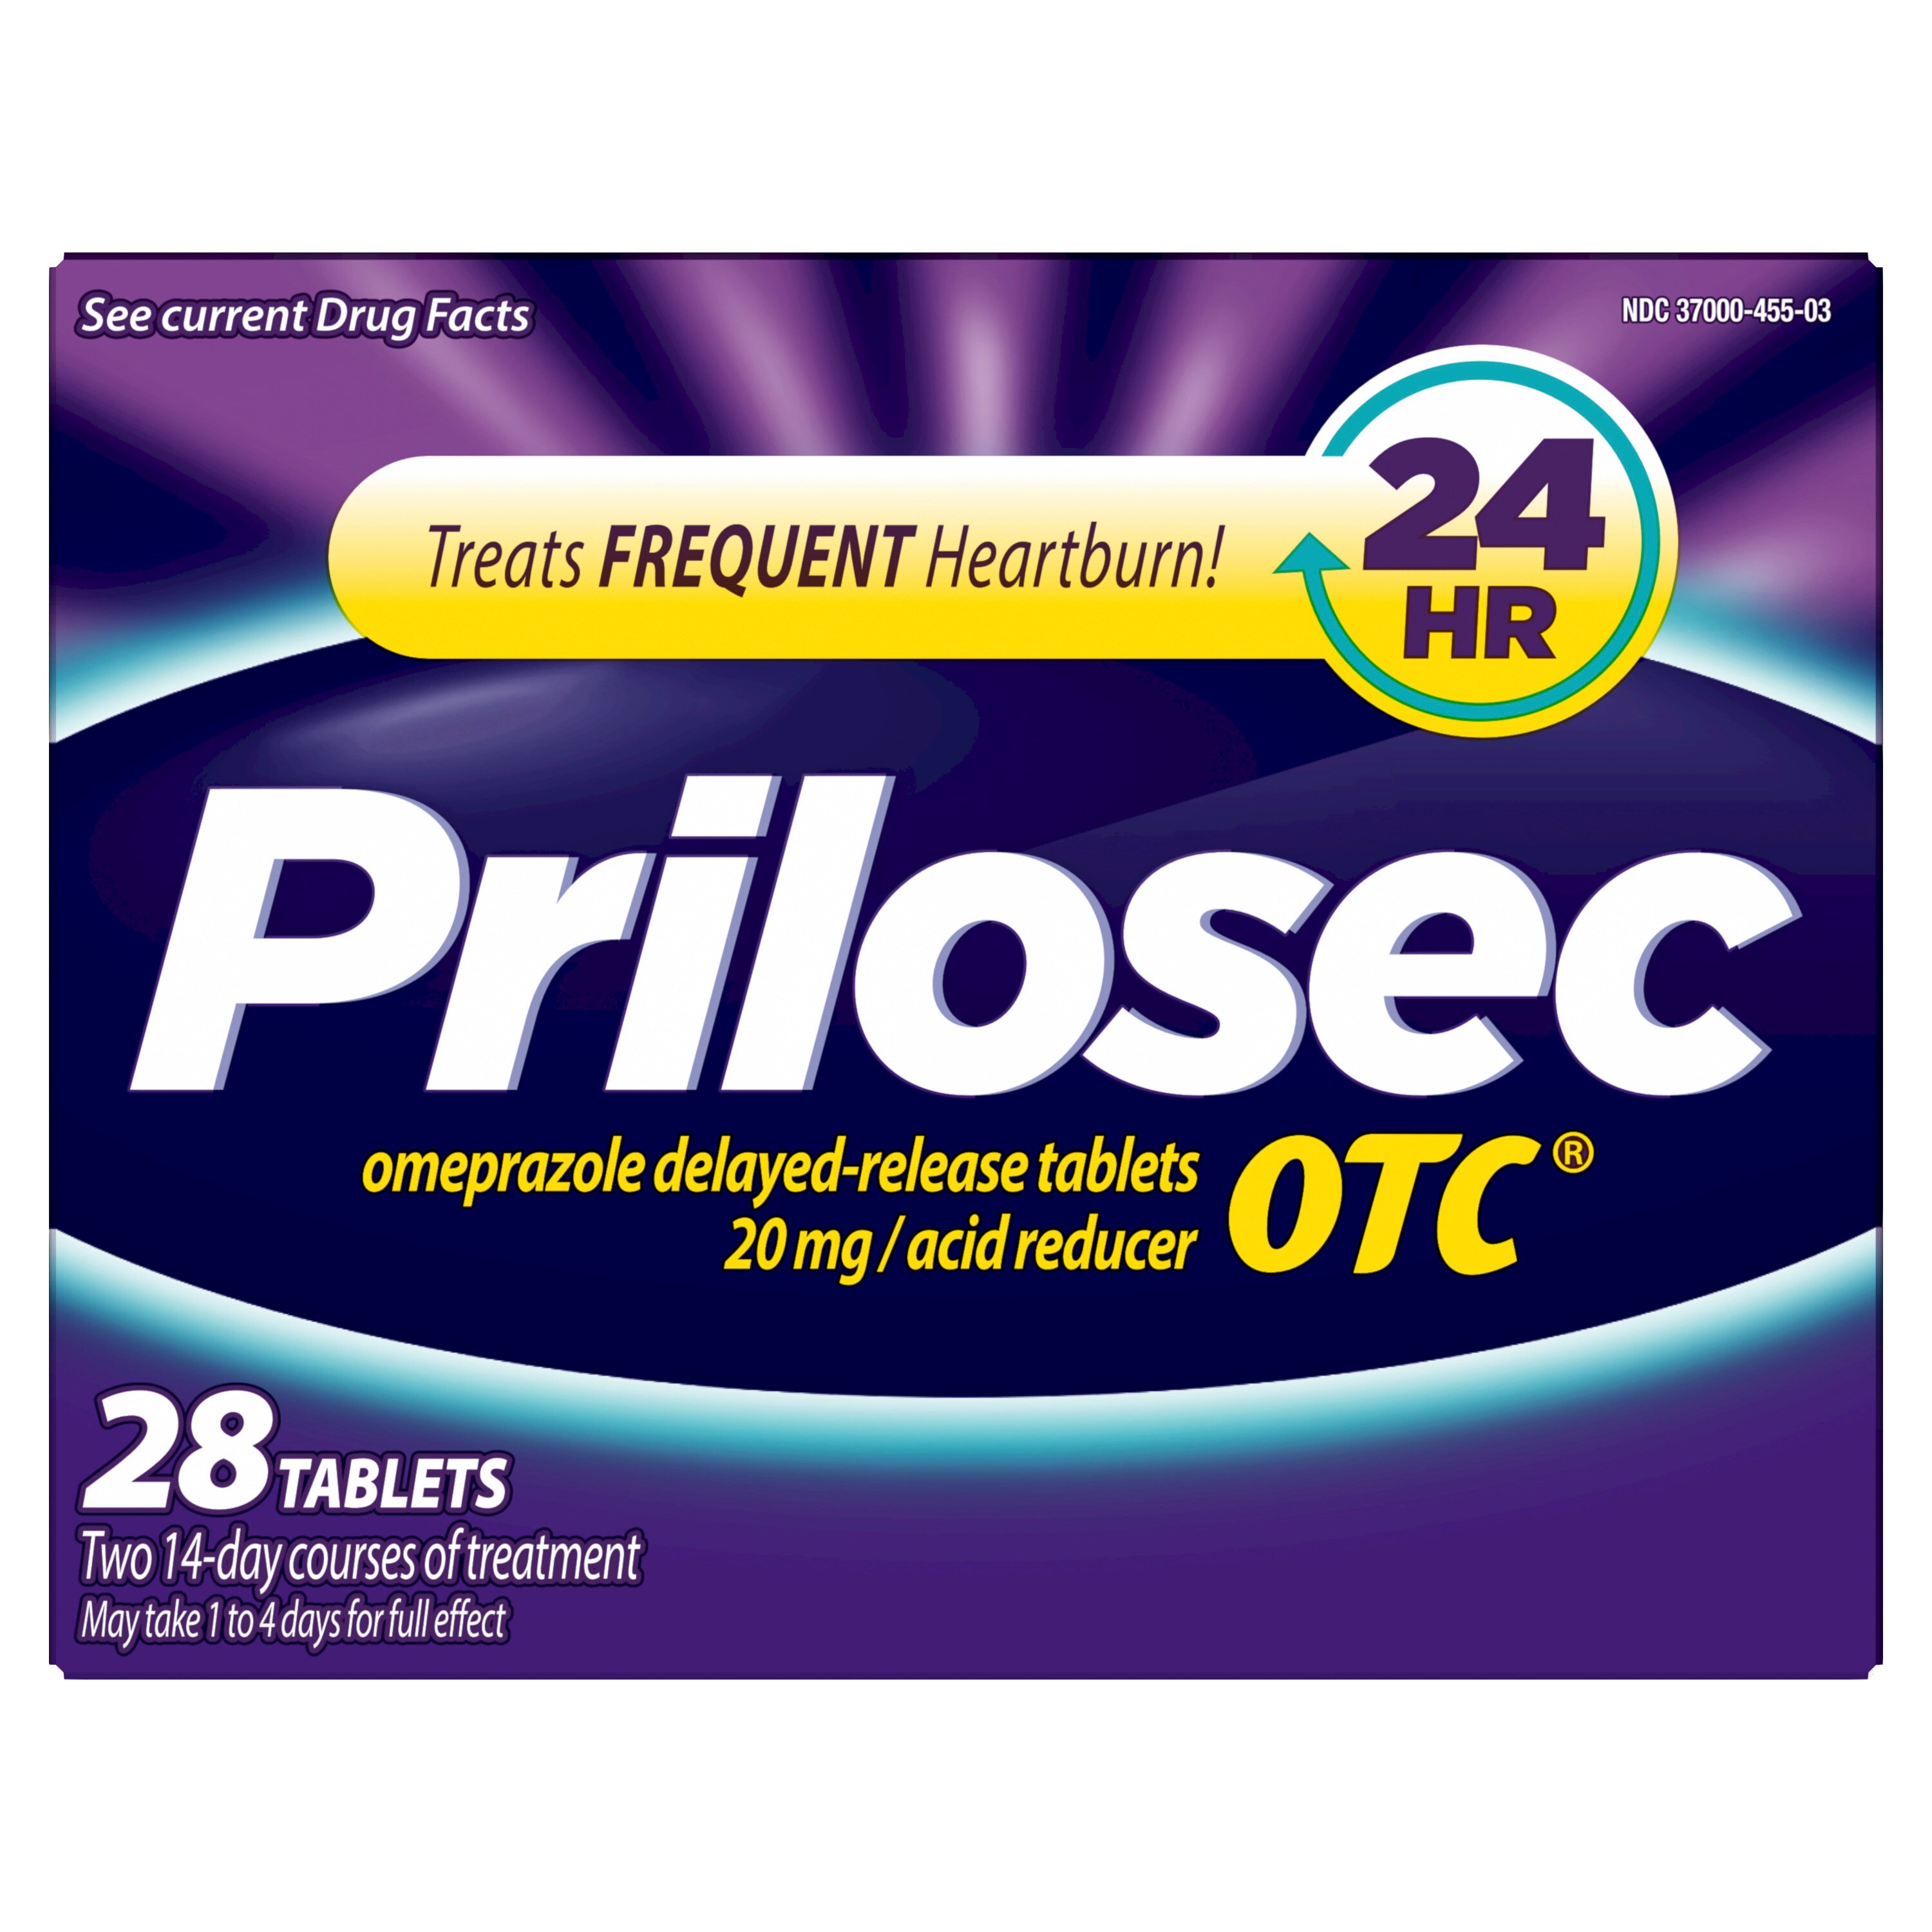 Prilosec OTC Omeprazole 20mg Delayed-Release Acid Reducer For Frequent Heartburn Tablets, 28 Ct , CVS